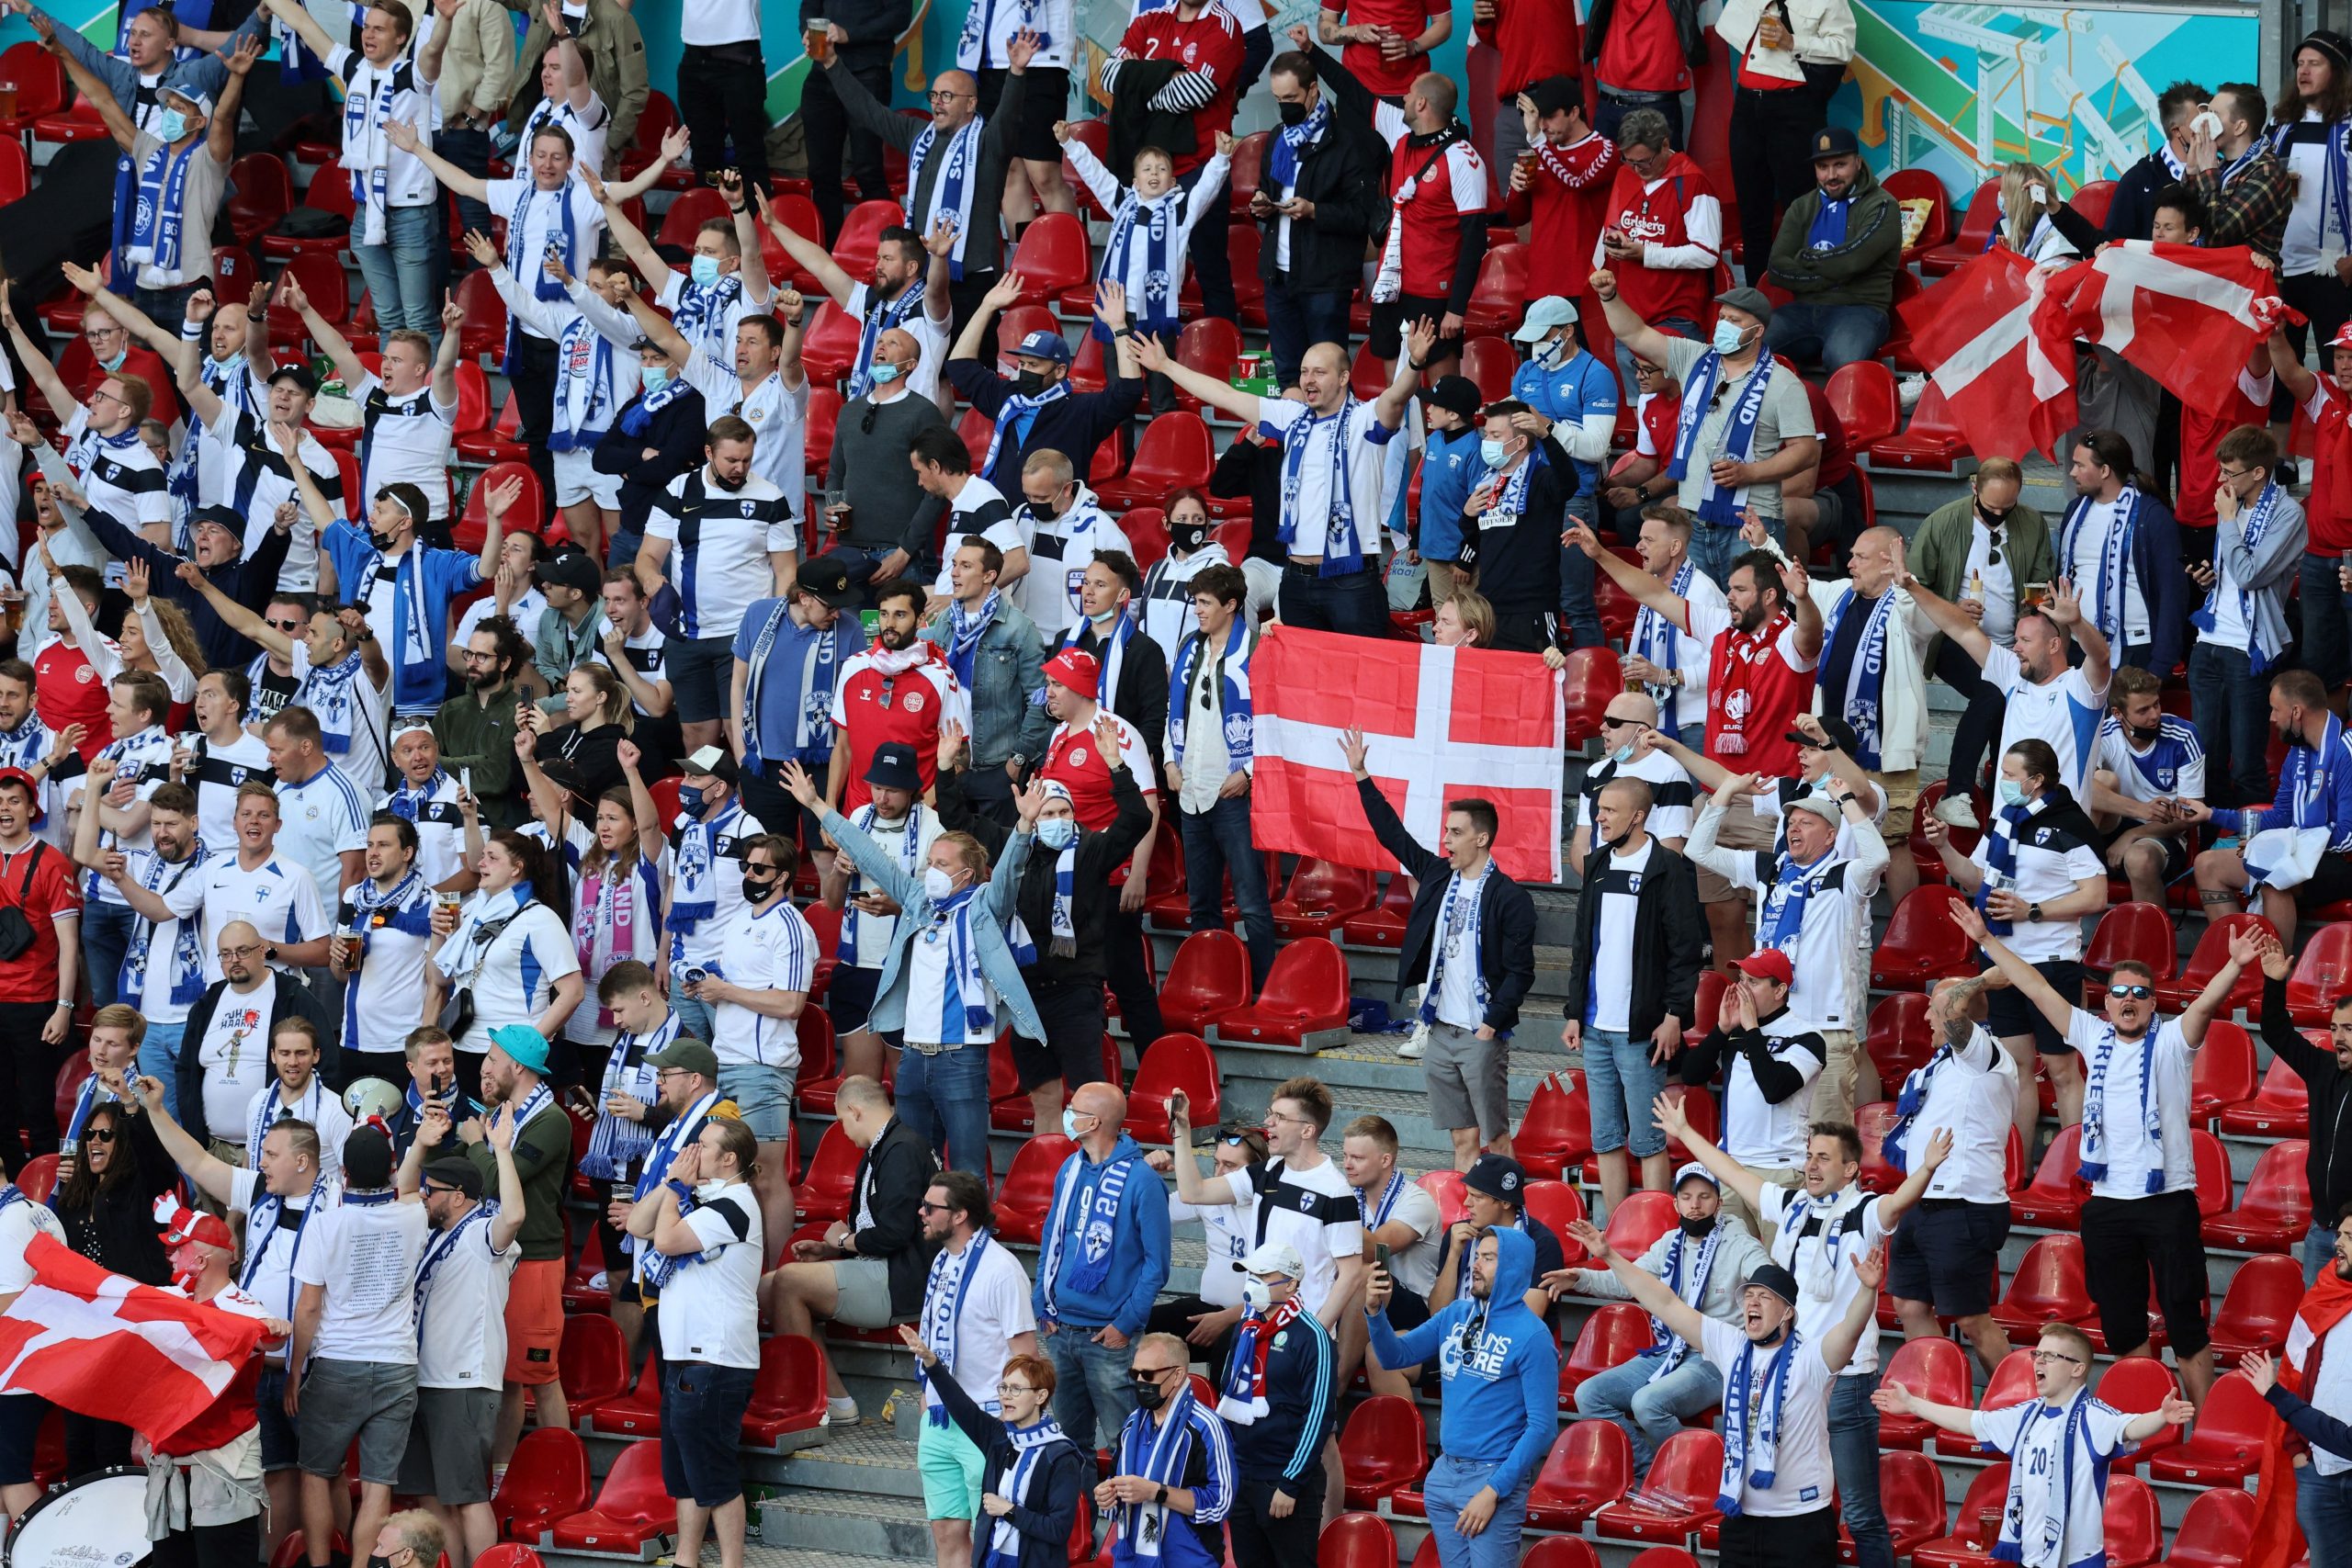 Watch | Finns roar ‘Christian’, Danes reply ‘Eriksen’ after midfielder collapses onfield